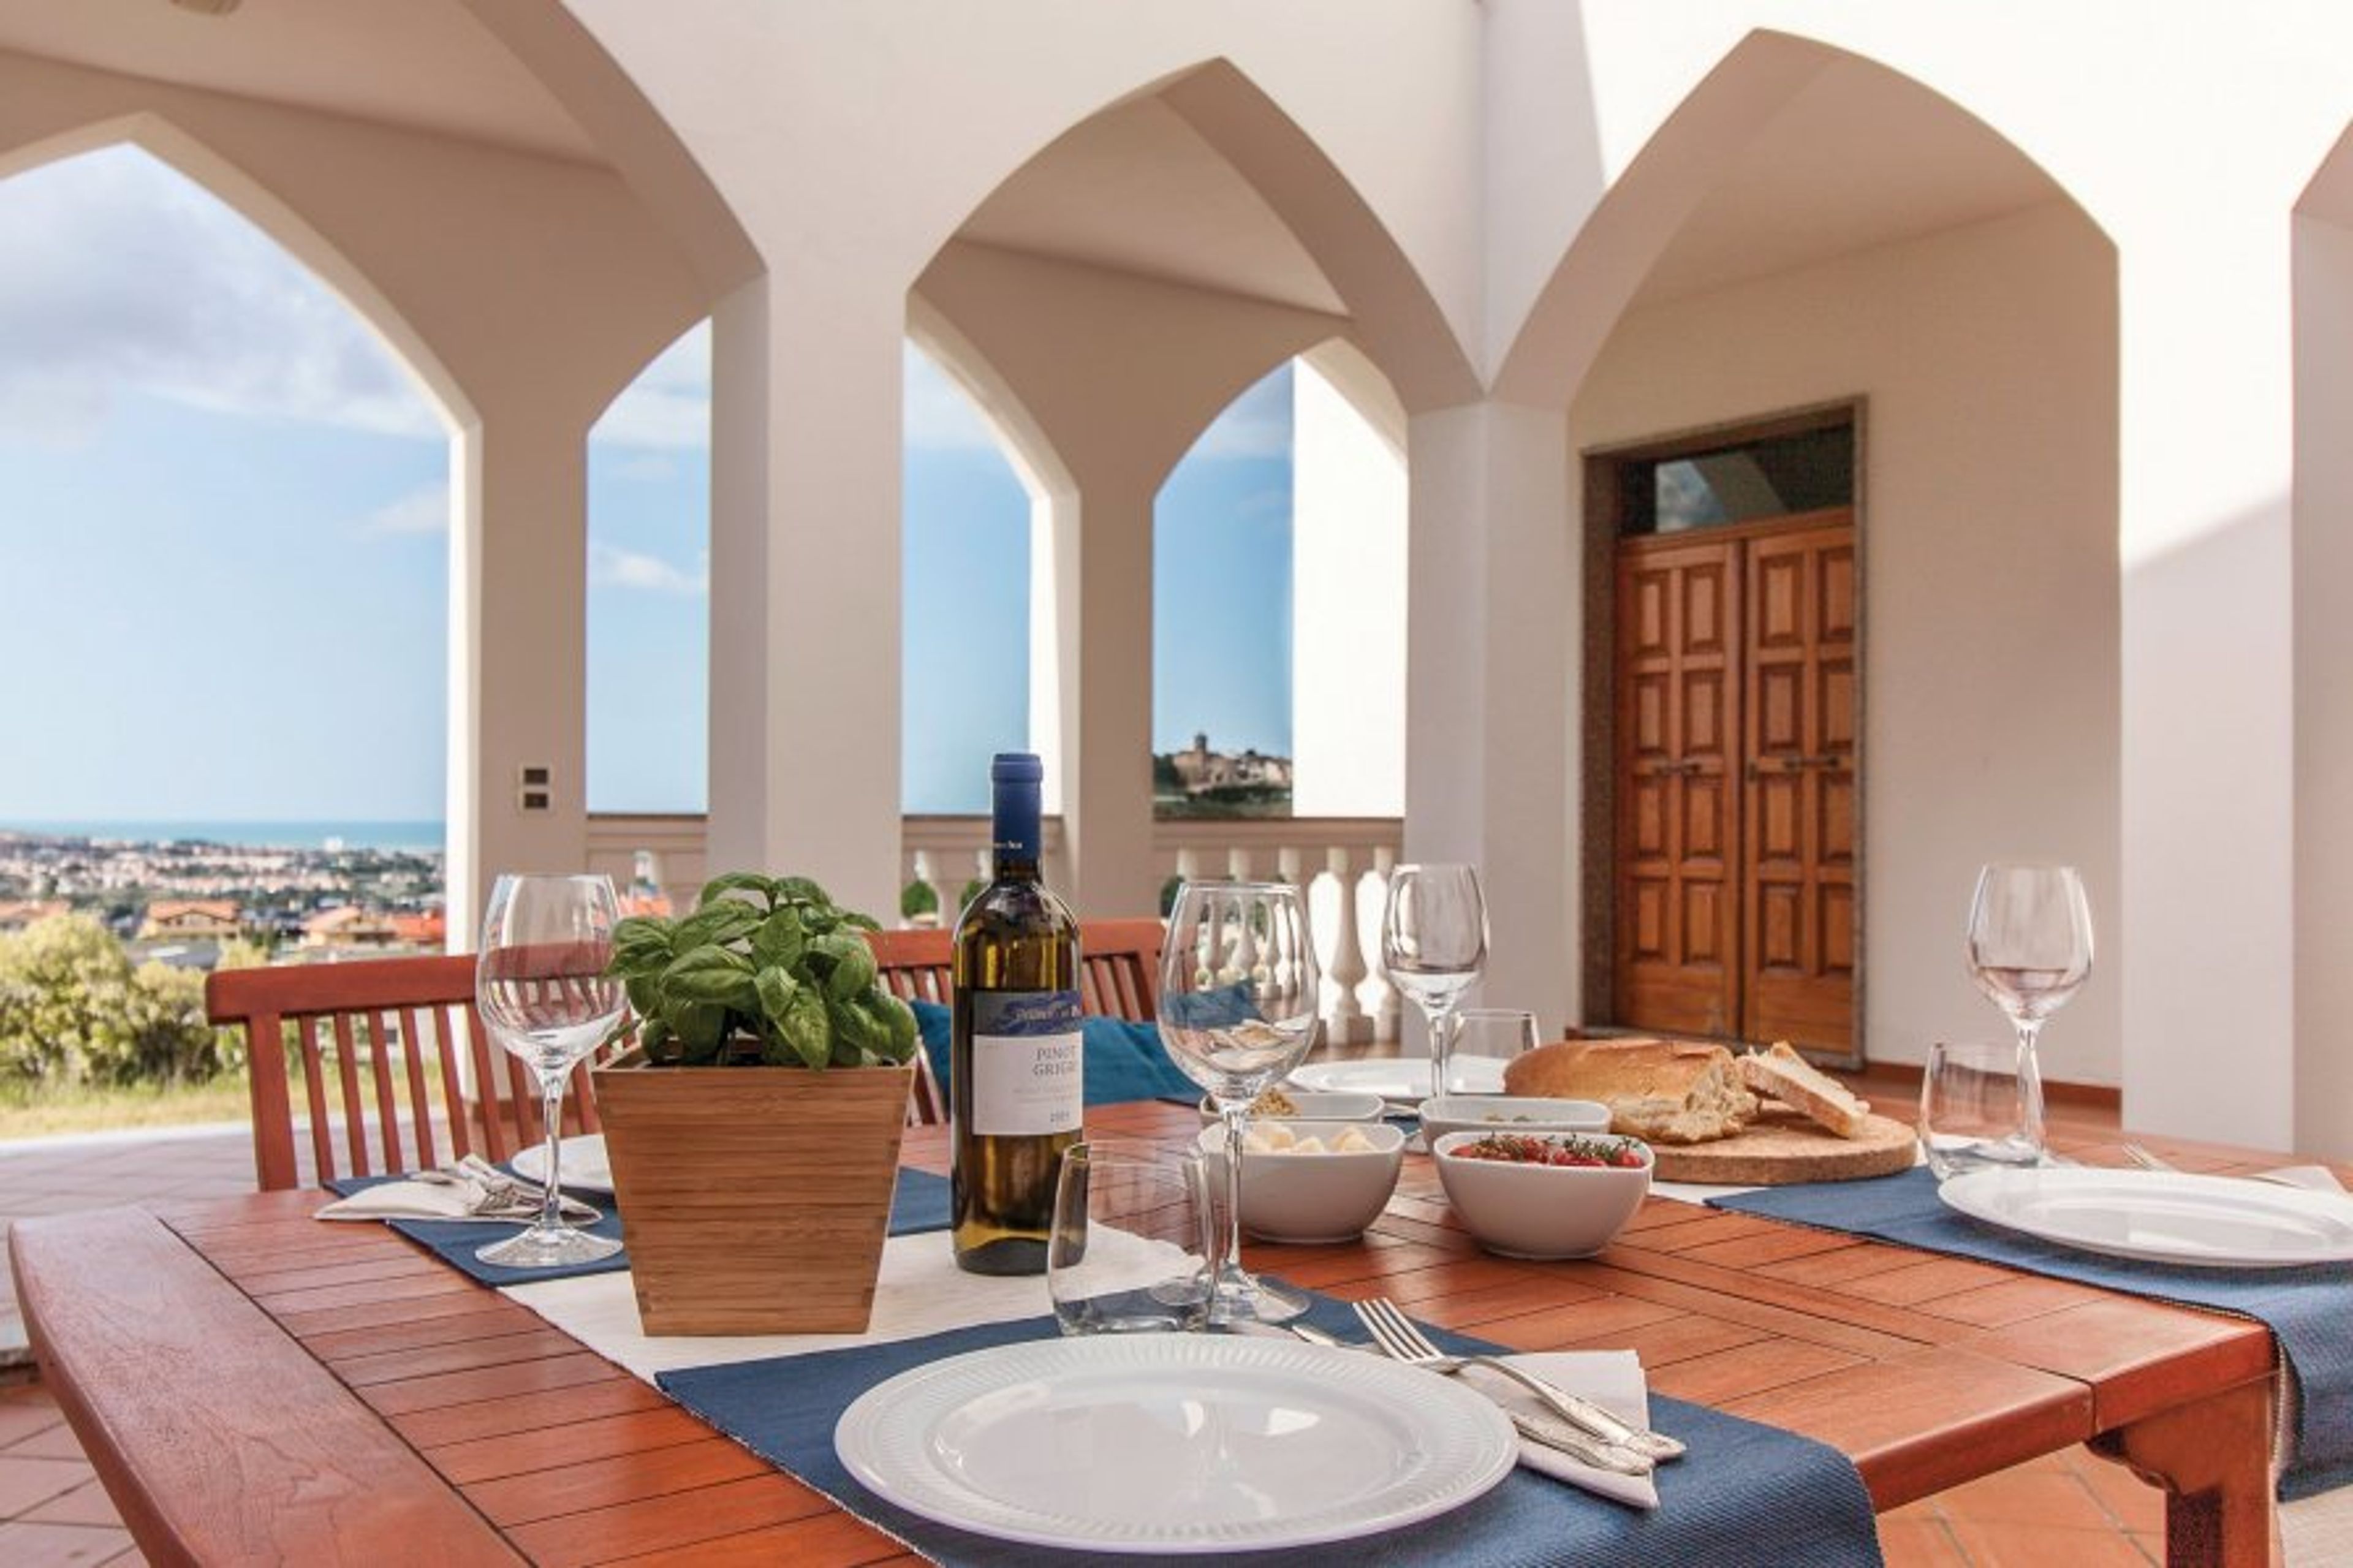 Dine "al fresco" while you enjoy spectacular panoramic views